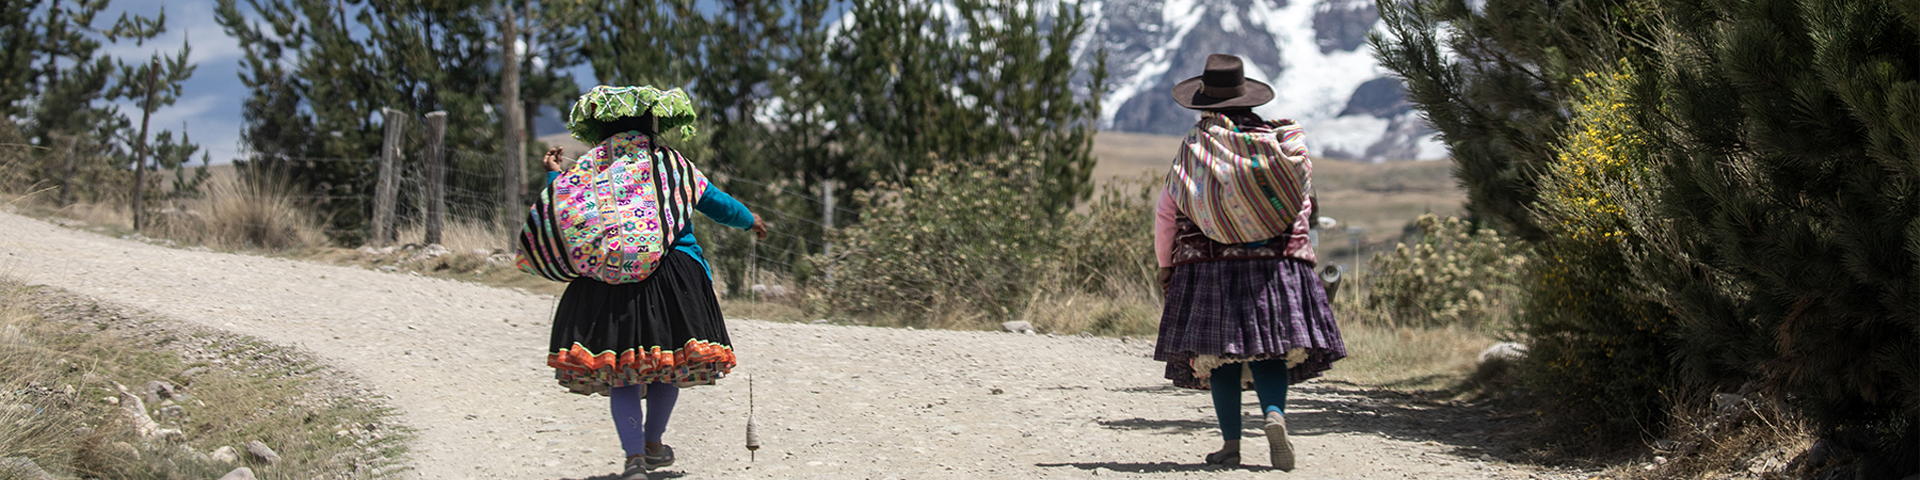 Women spin alpaca fibres on their way home.